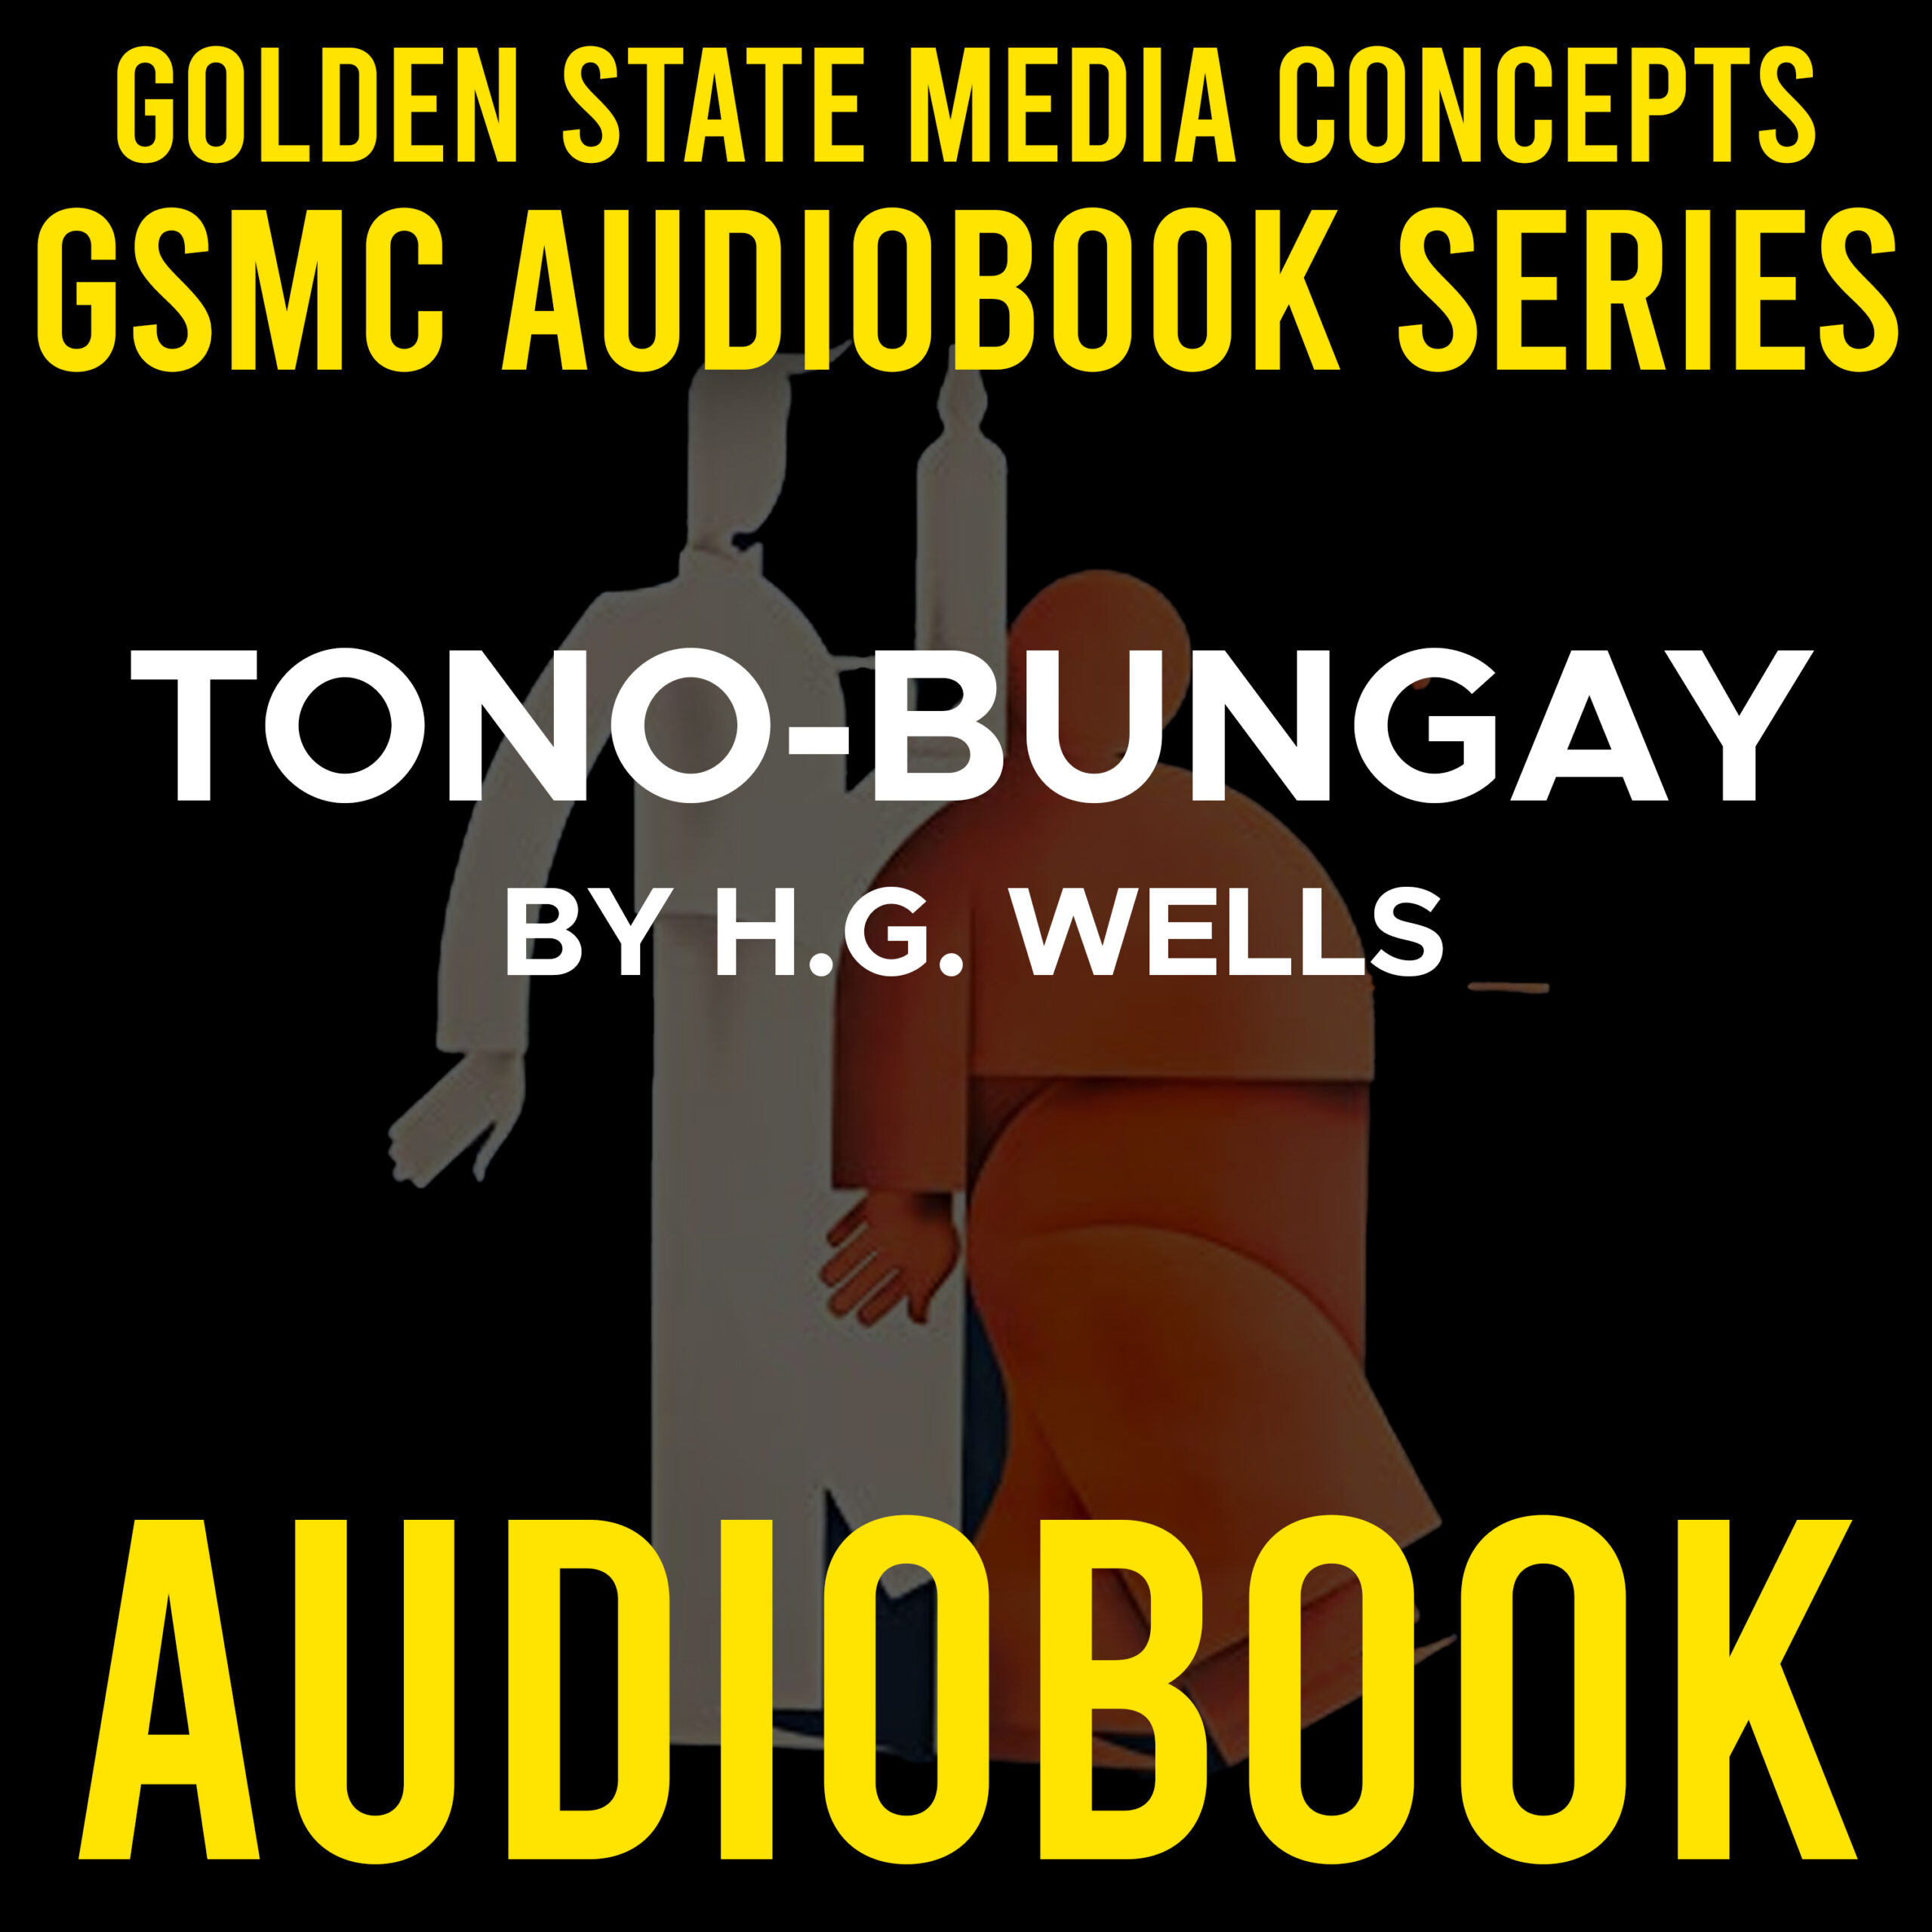 GSMC Audiobook Series: Tono-Bungay by H.G. Wells